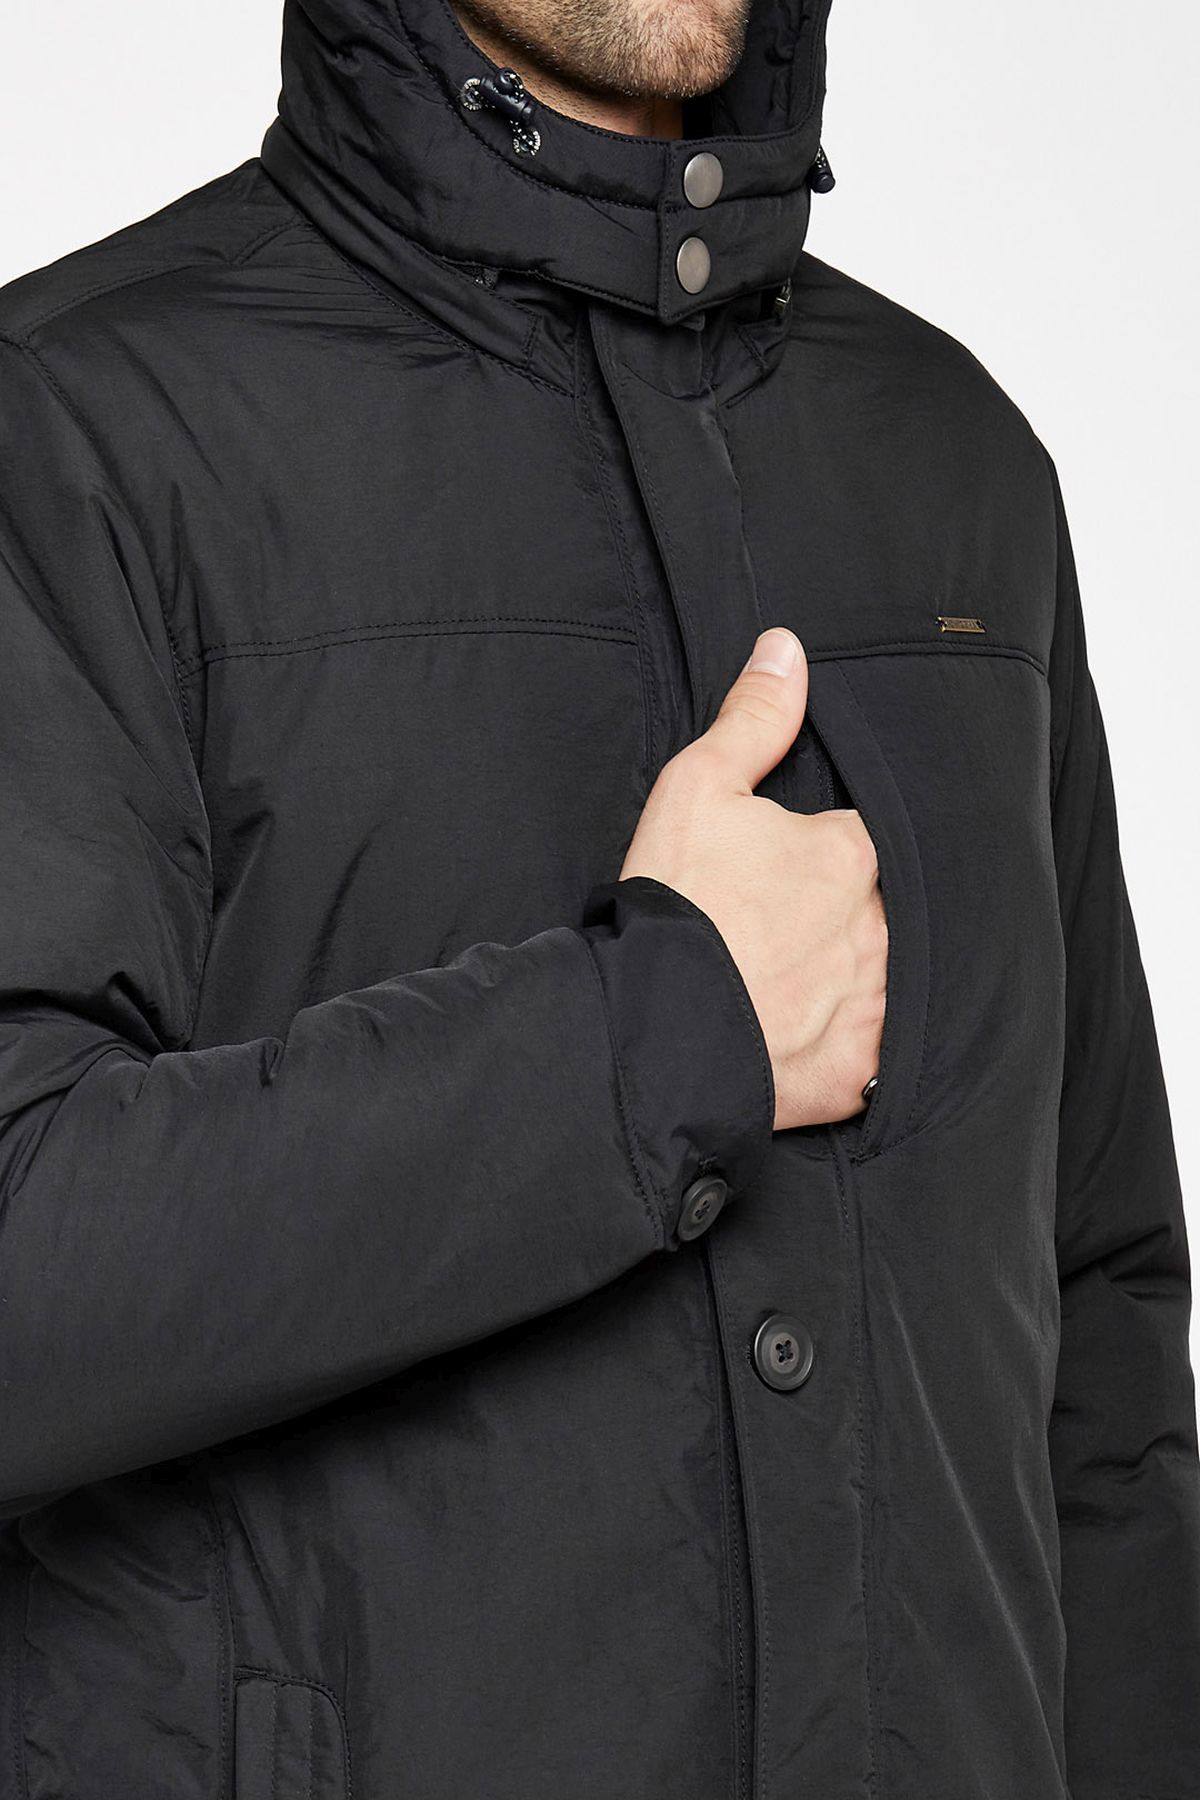 Classic Black Water Resistant Parka Jacket | Men